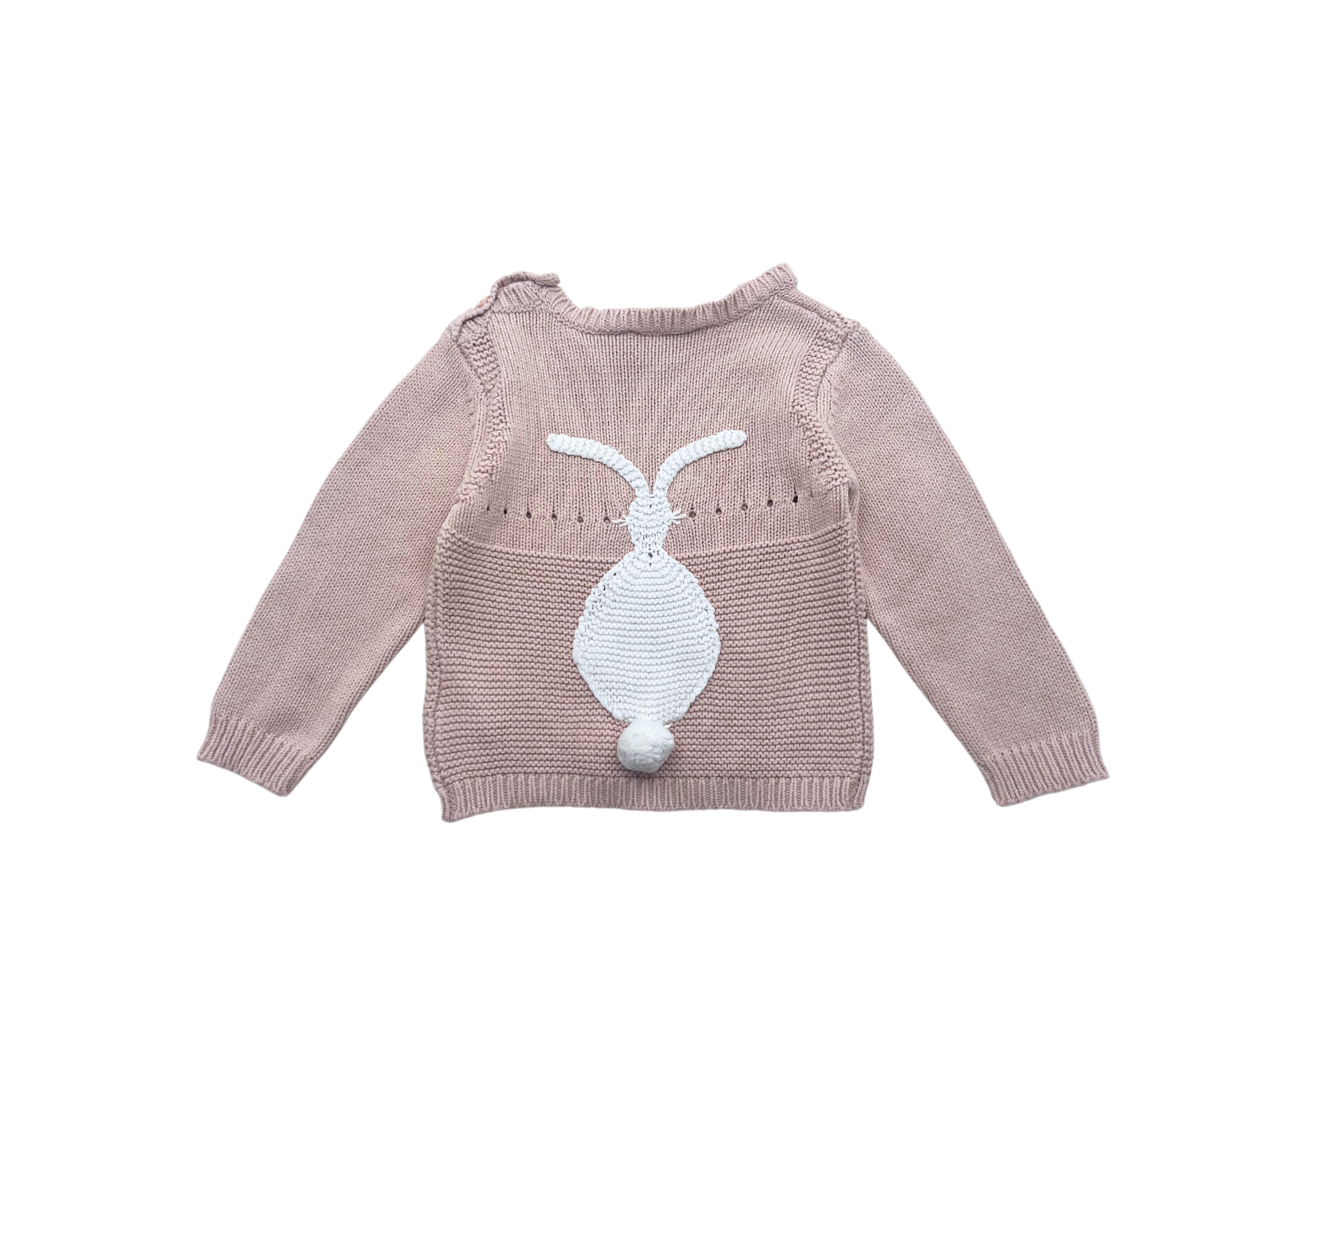 STELLA MCCARTNEY - Rabbit sweater - 18 months